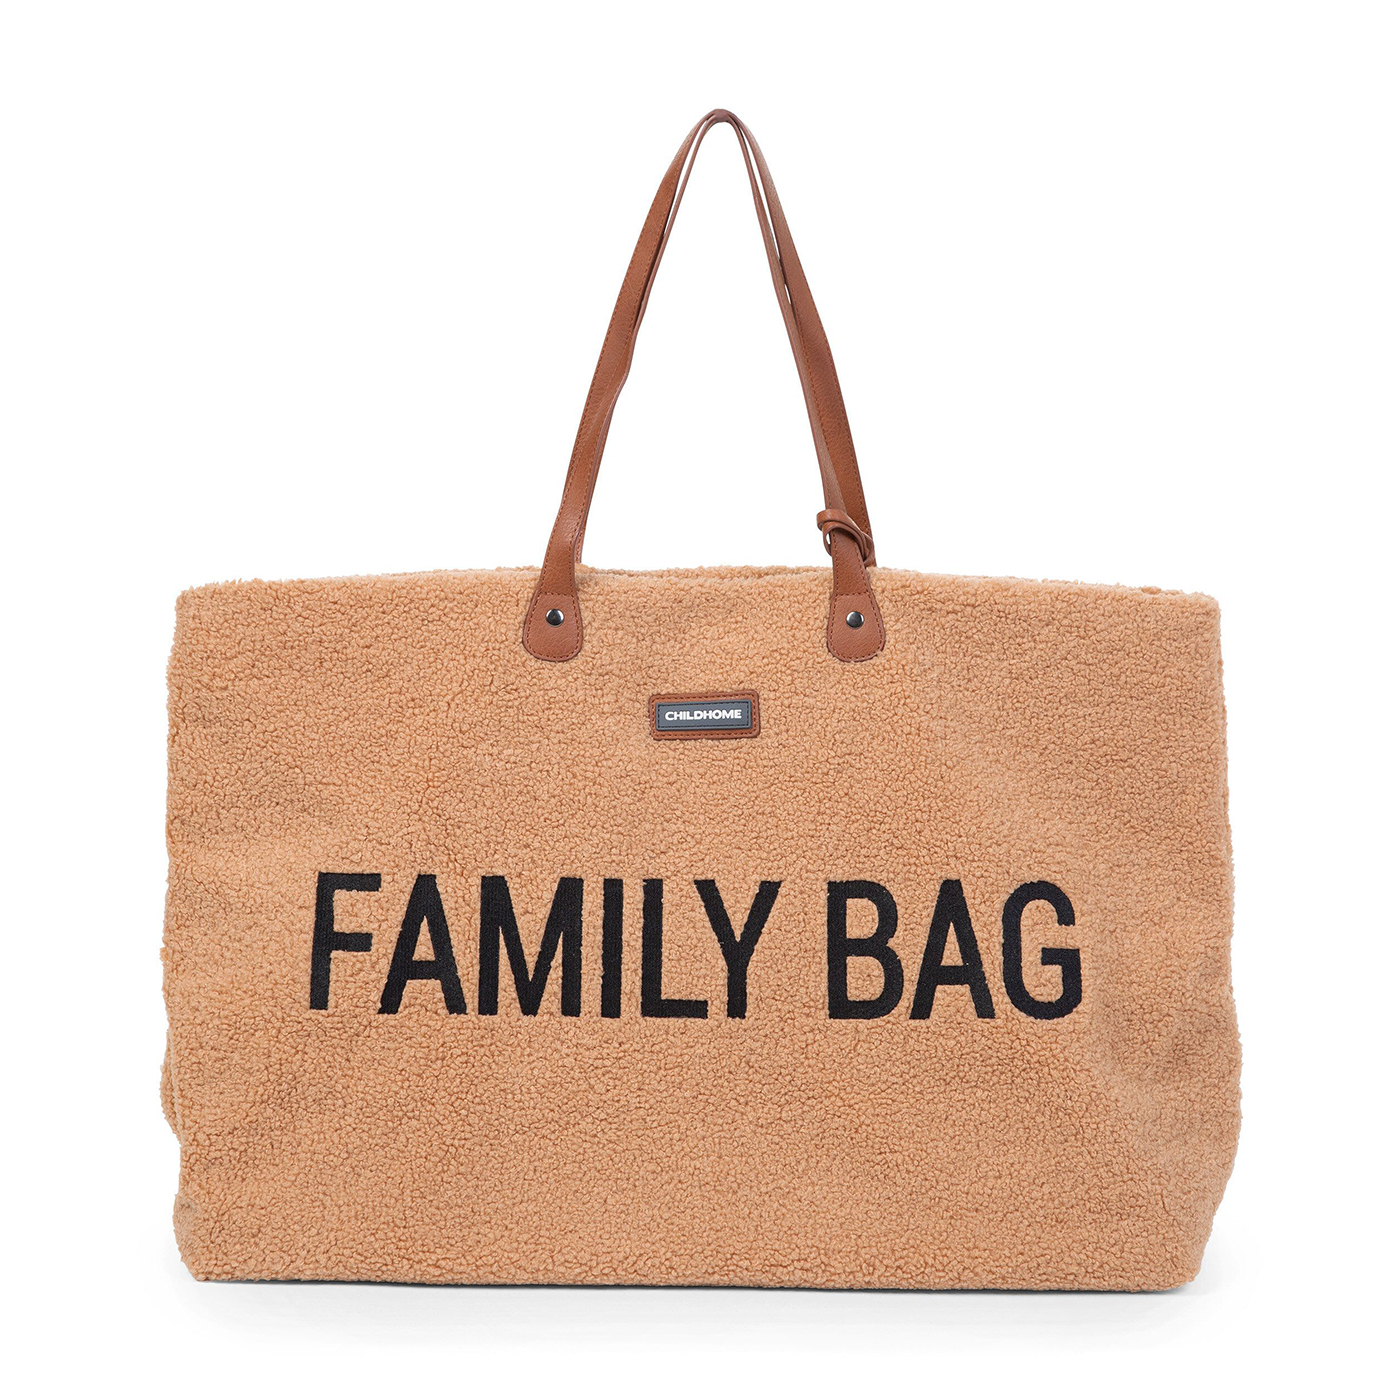 CHILDHOME Childhome Family Bag Teddy Anne Bebek Çantası | Beige